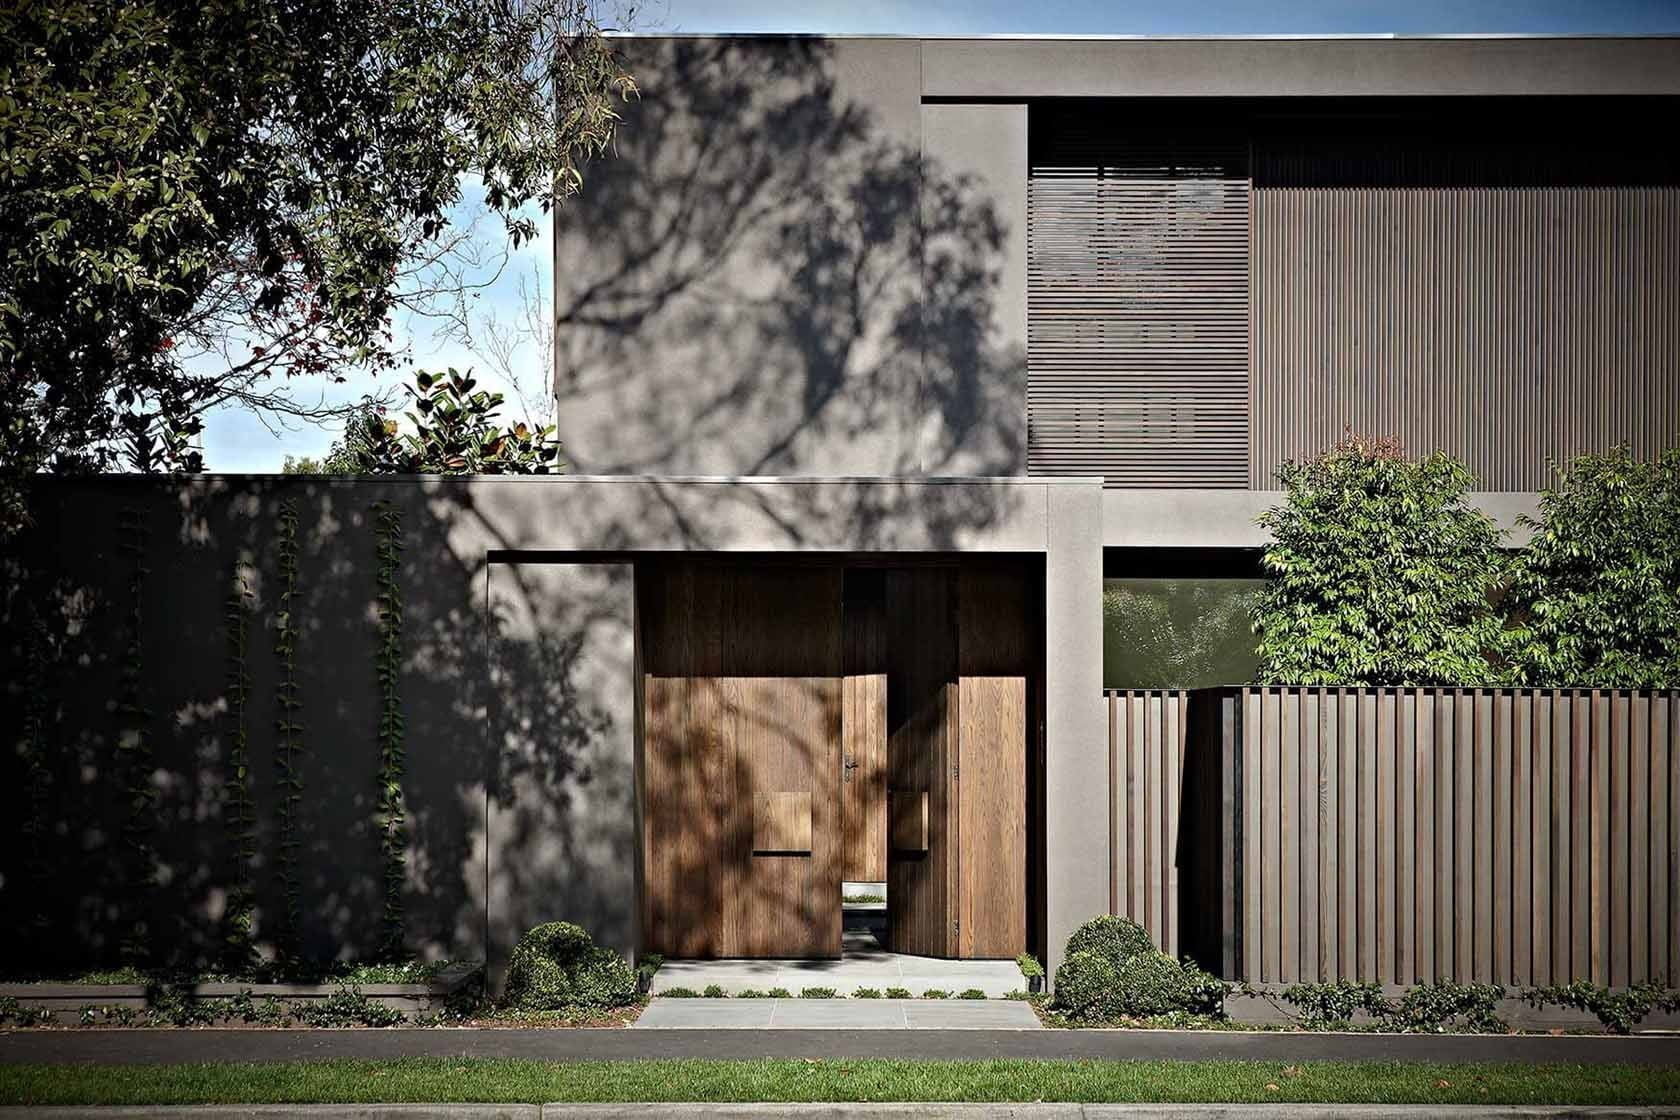 modern-architectural-house-facade-2021-08-27-19-27-36-utc.jpg